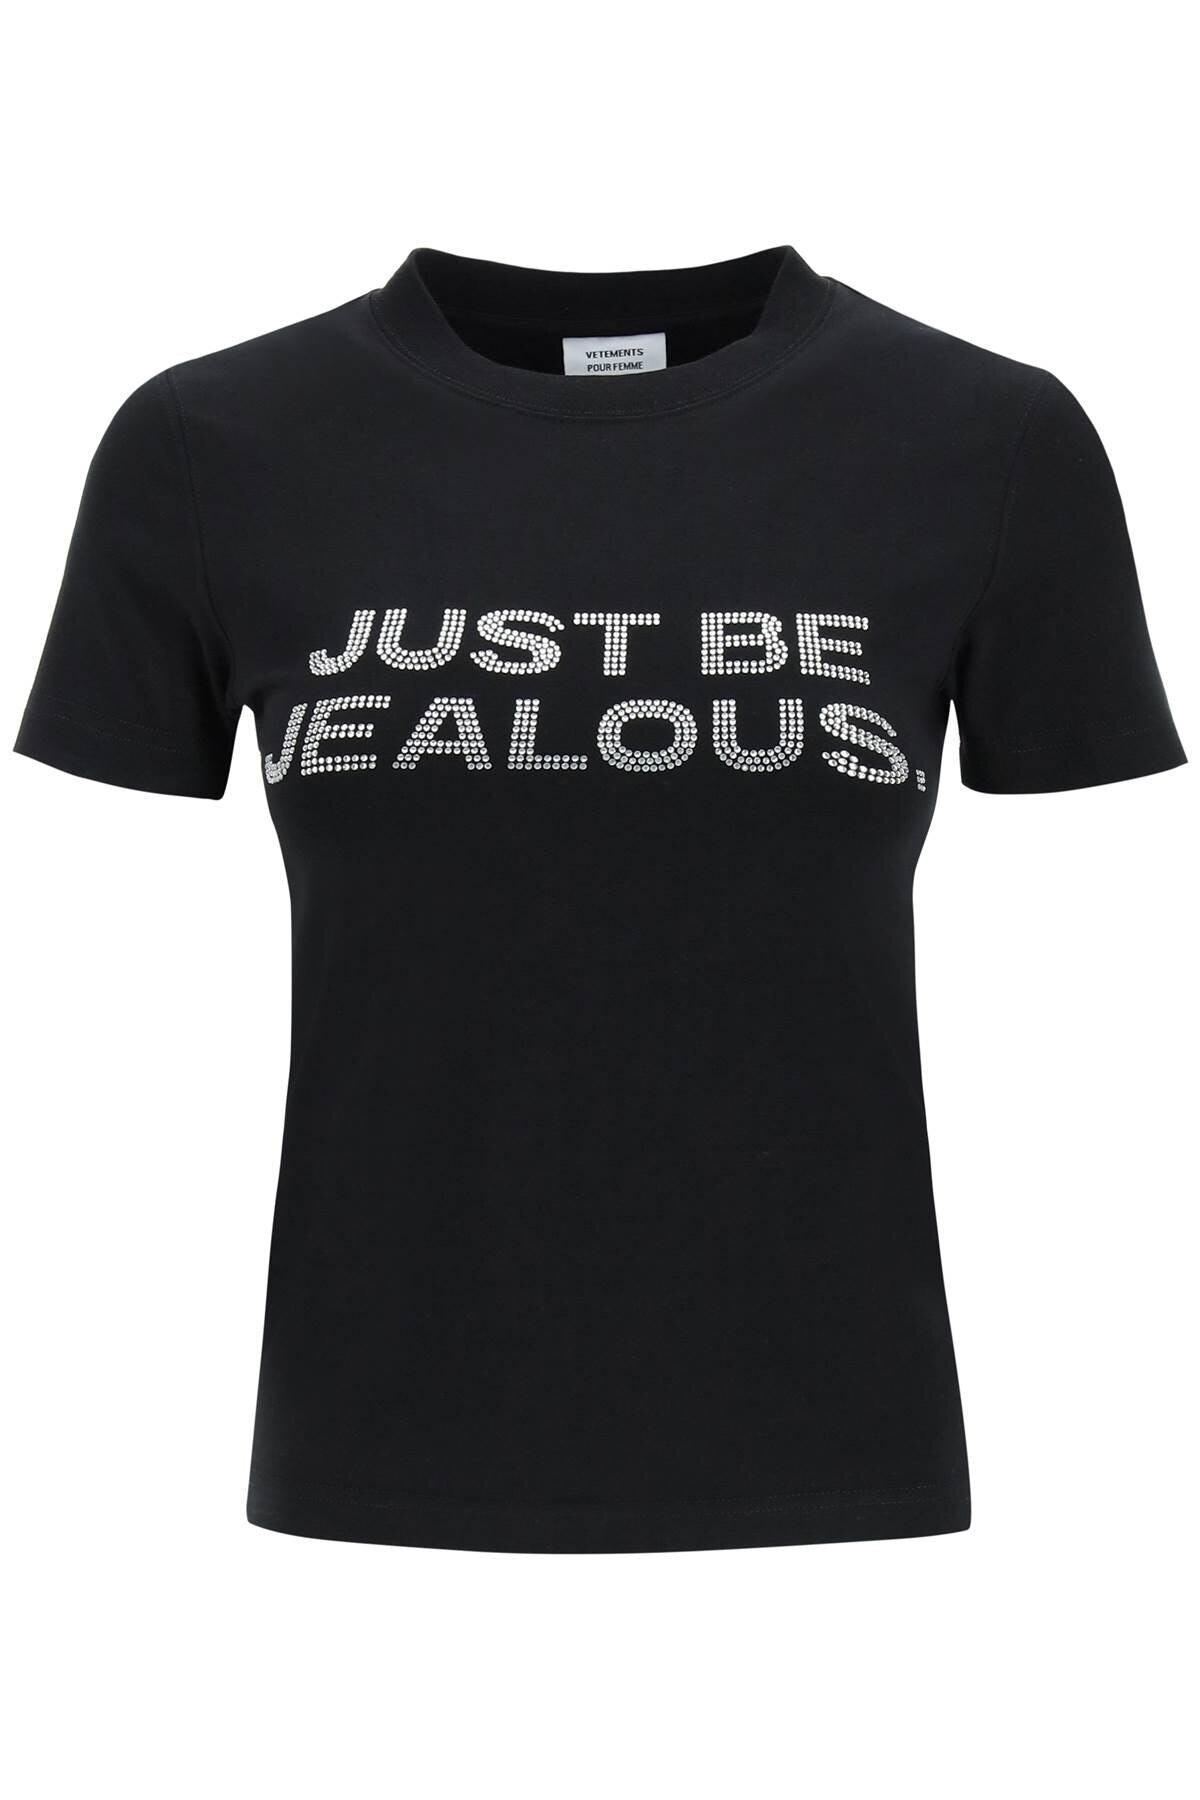 Vetements 'just Be Jelaous' Rhinestone T-shirt in Black | Lyst